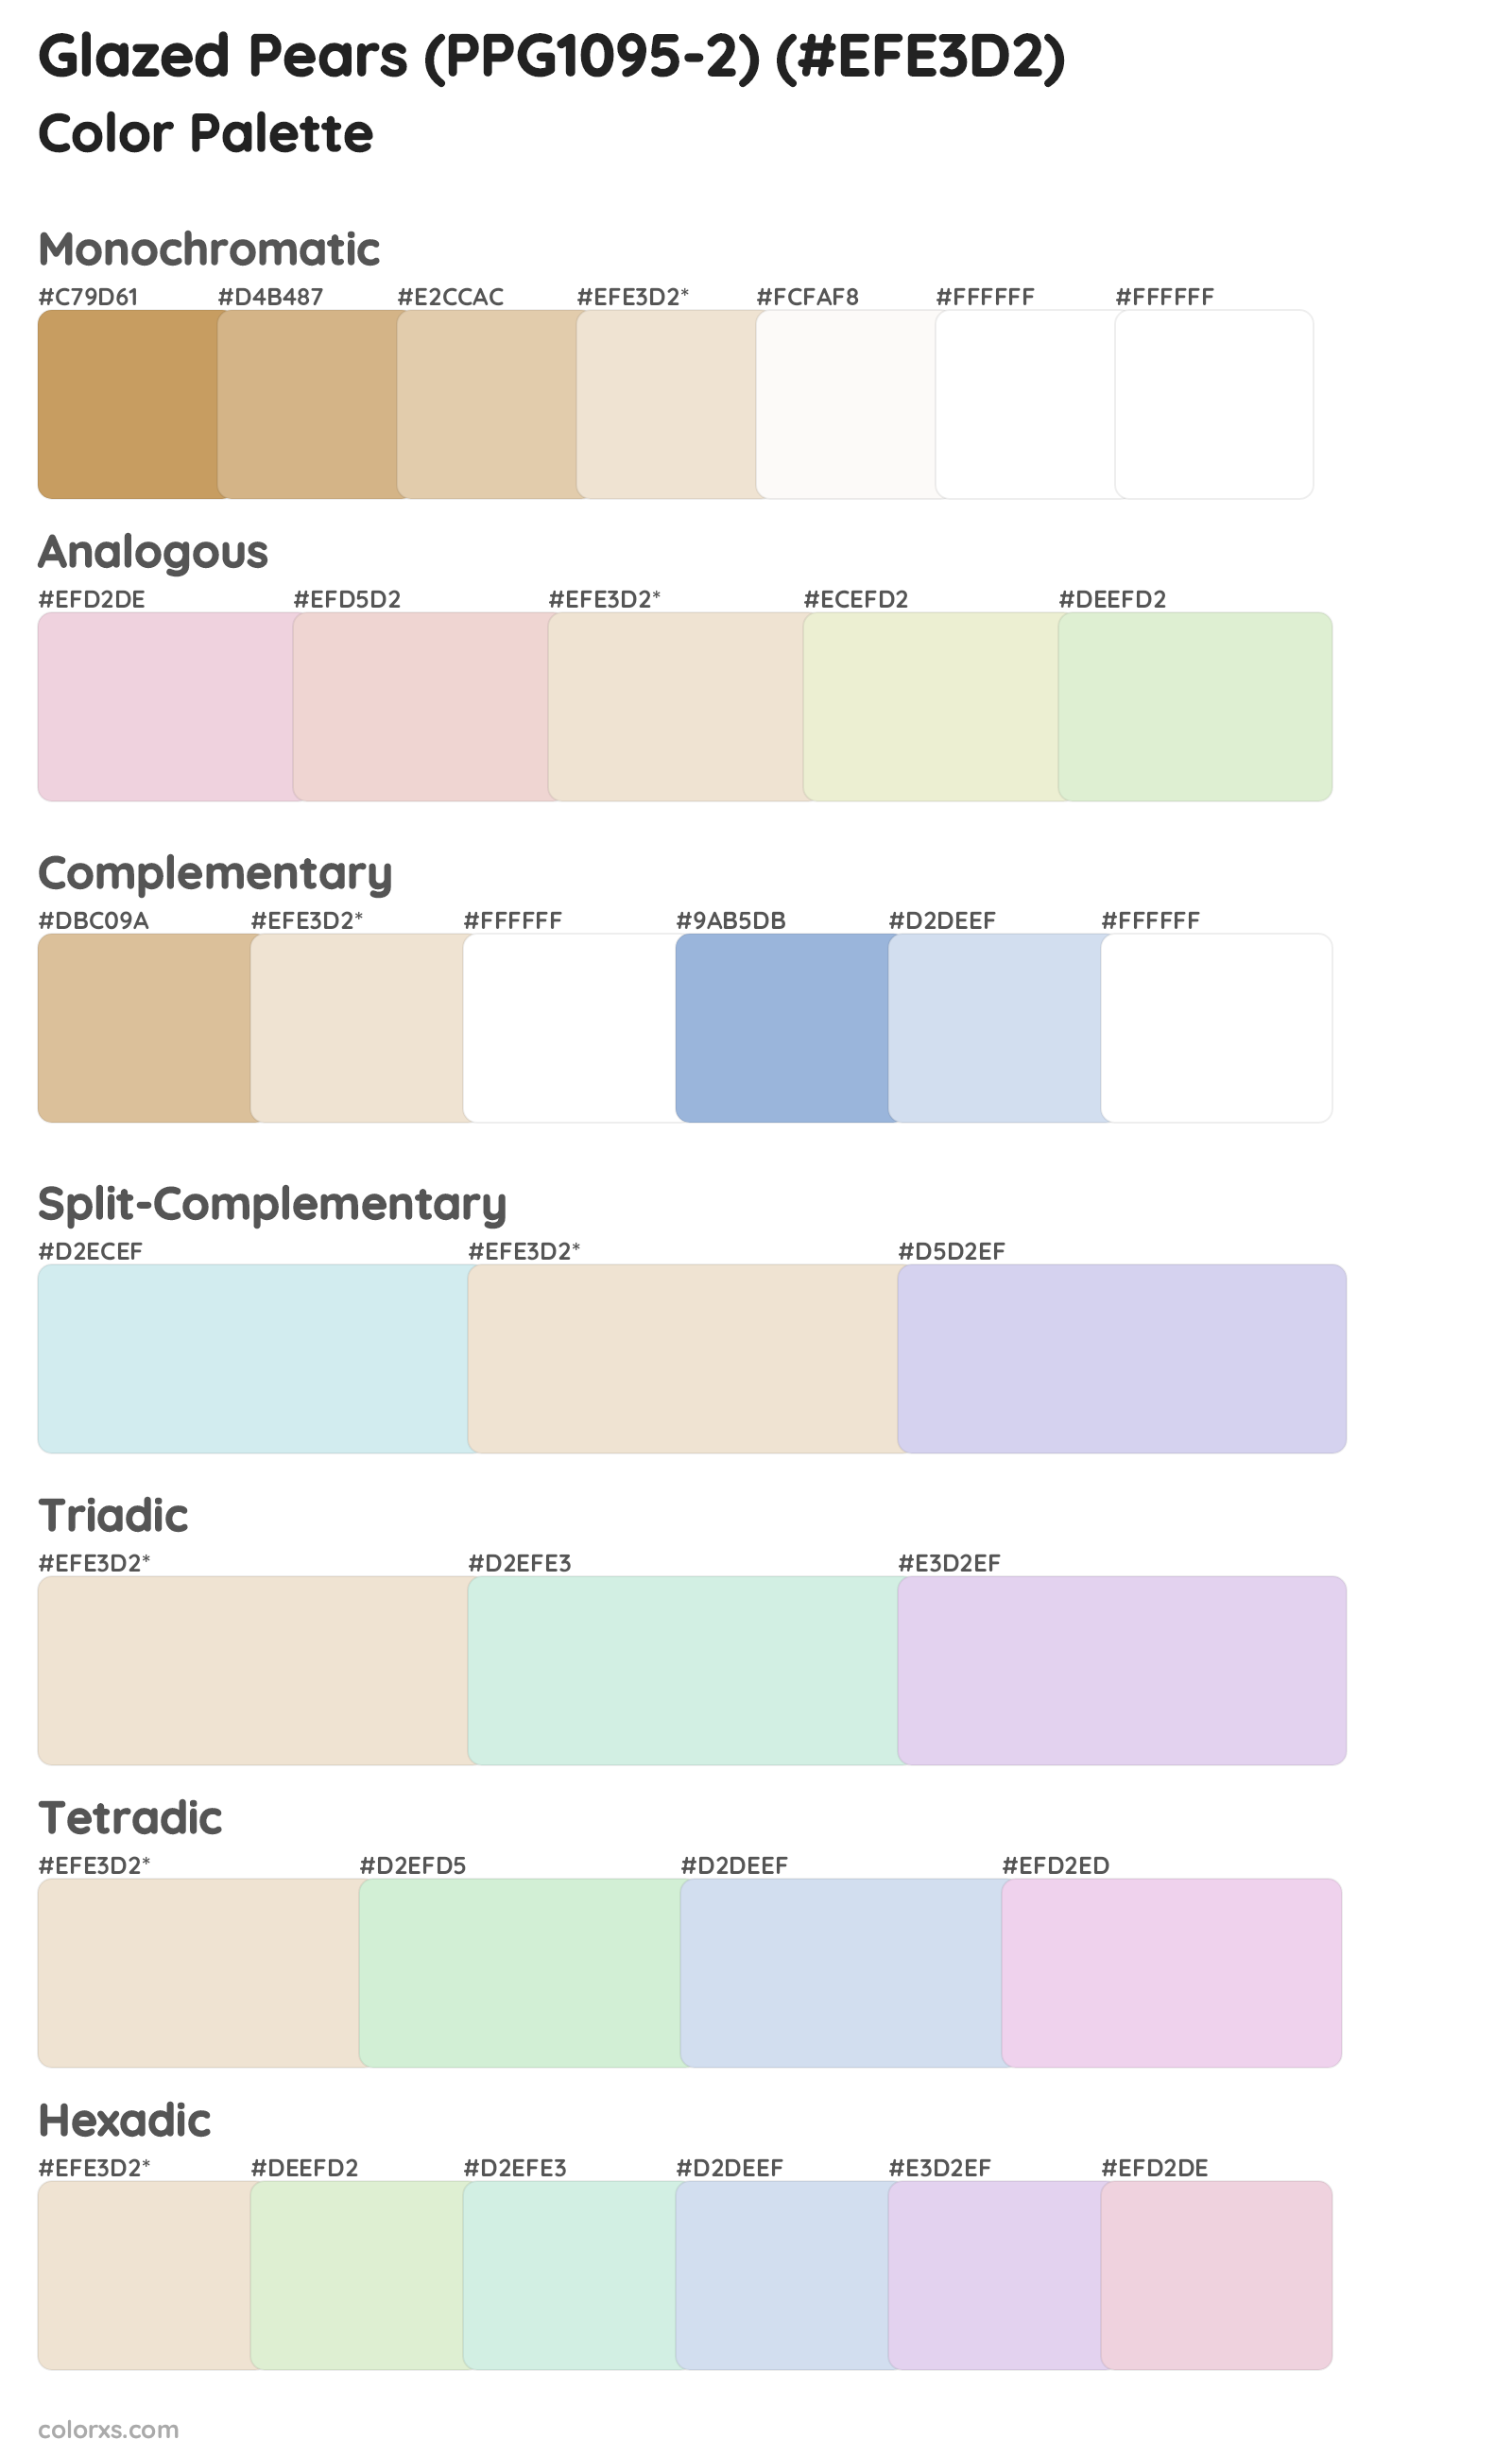 Glazed Pears (PPG1095-2) Color Scheme Palettes